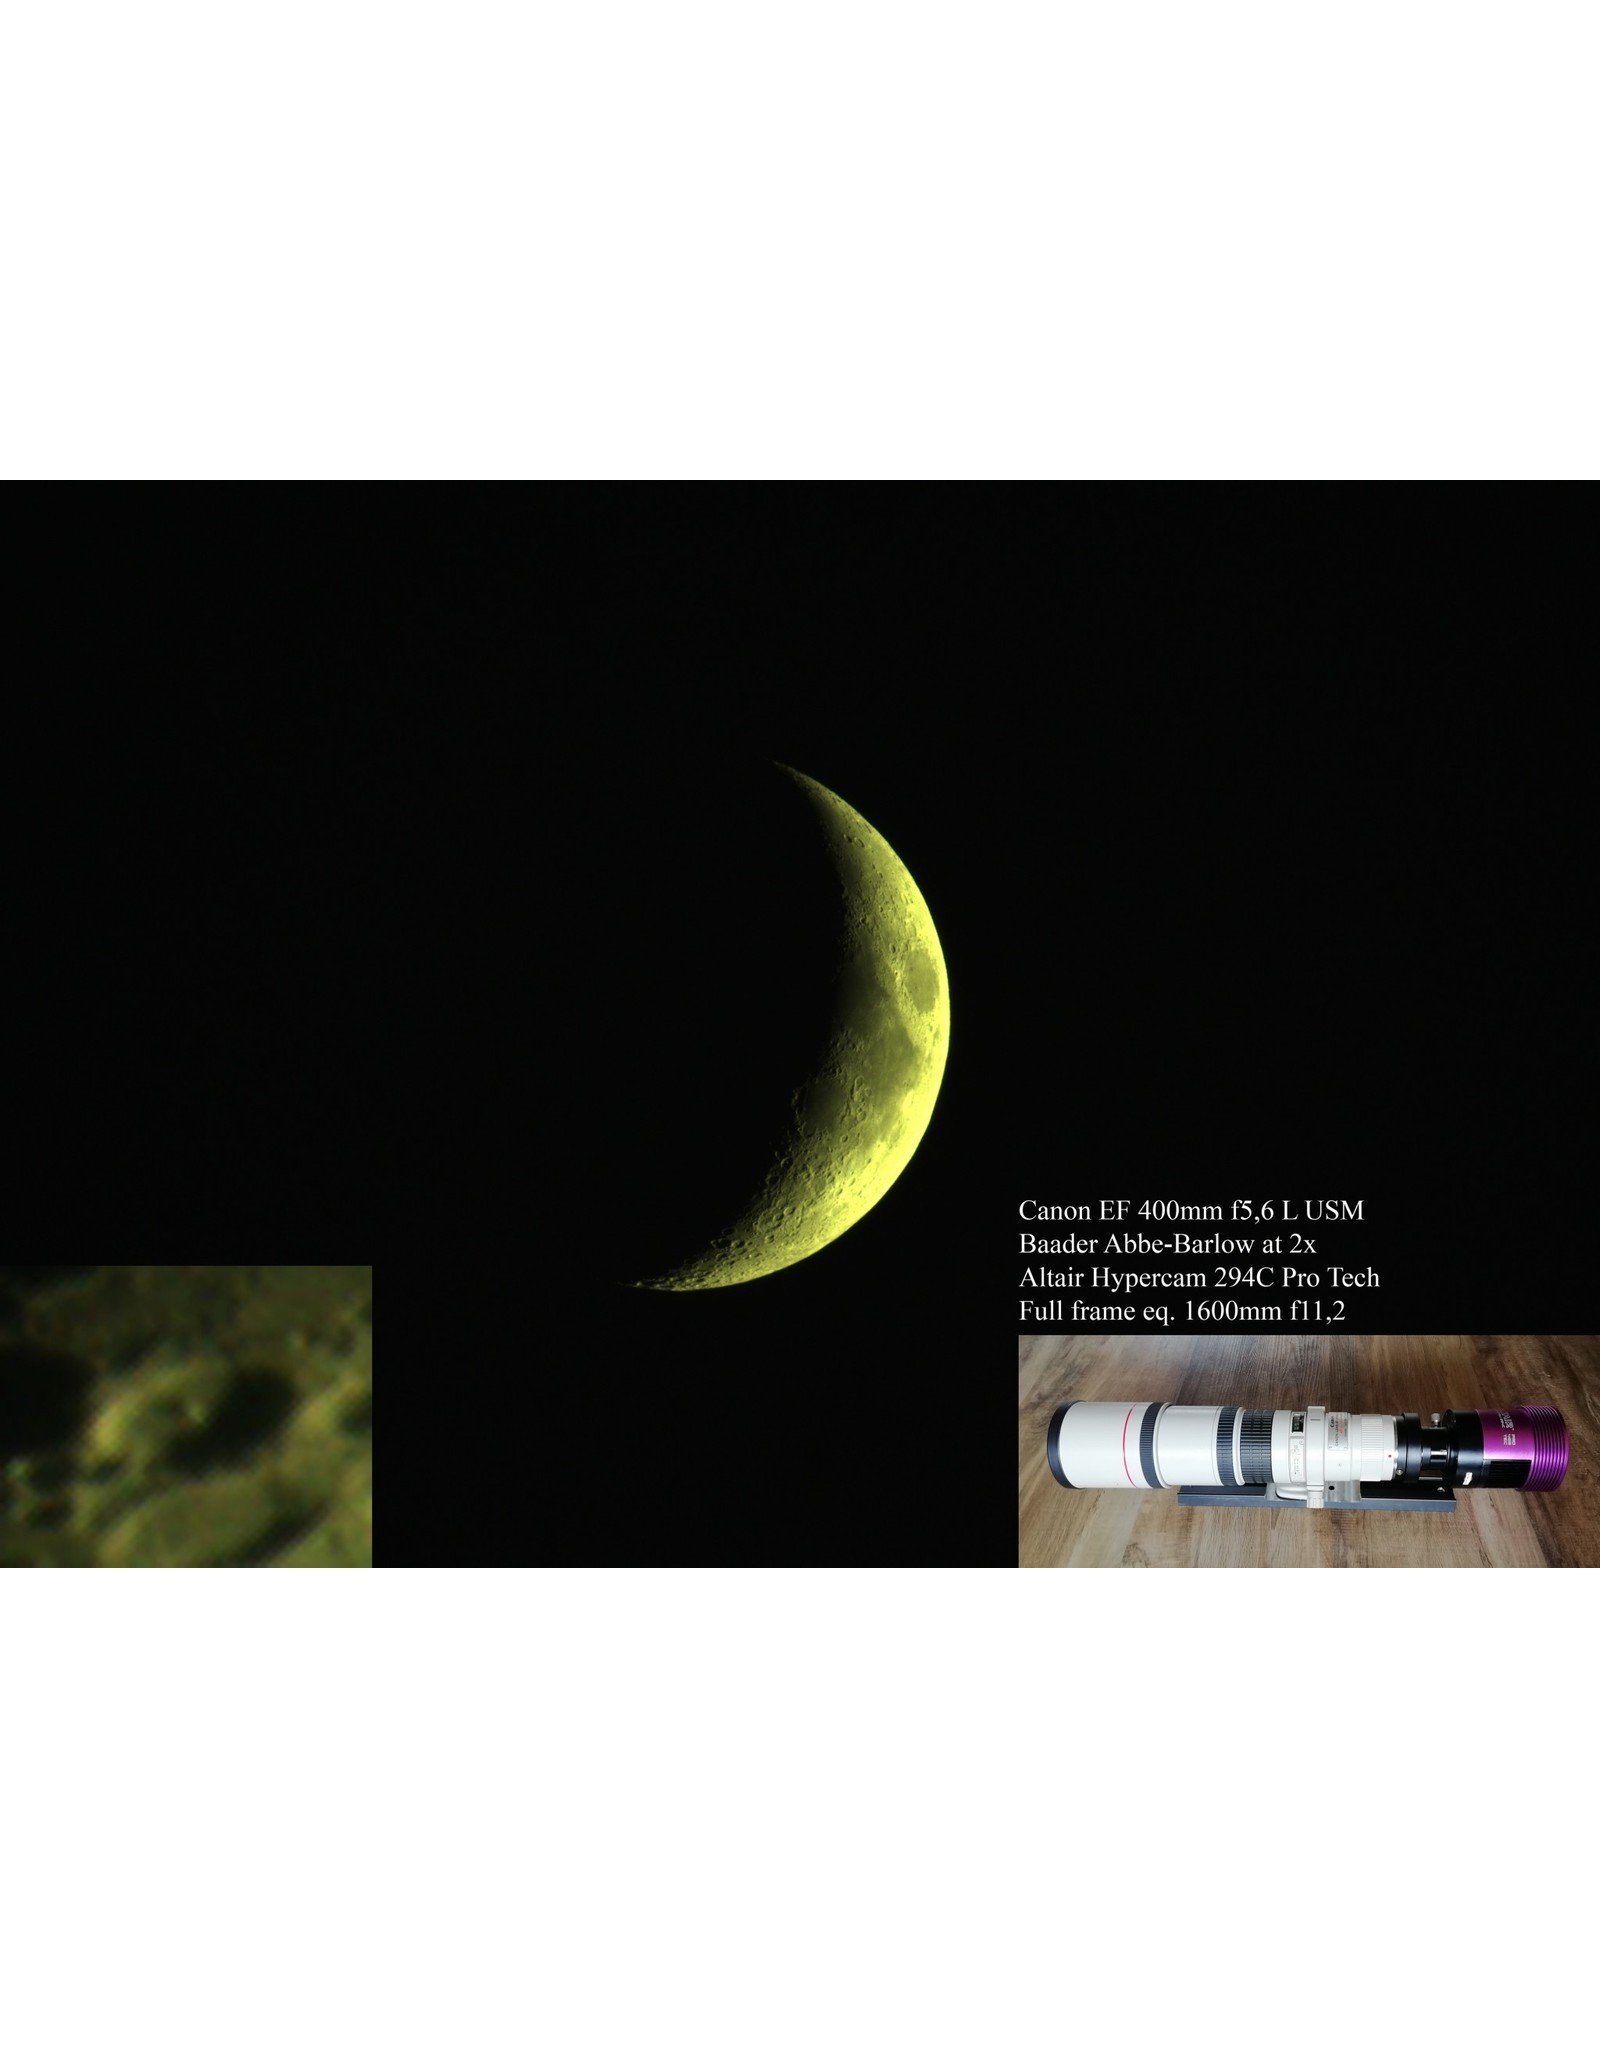 Baader Planetarium Baader Carl Zeiss 1¼" Abbe Barlow lens 2x